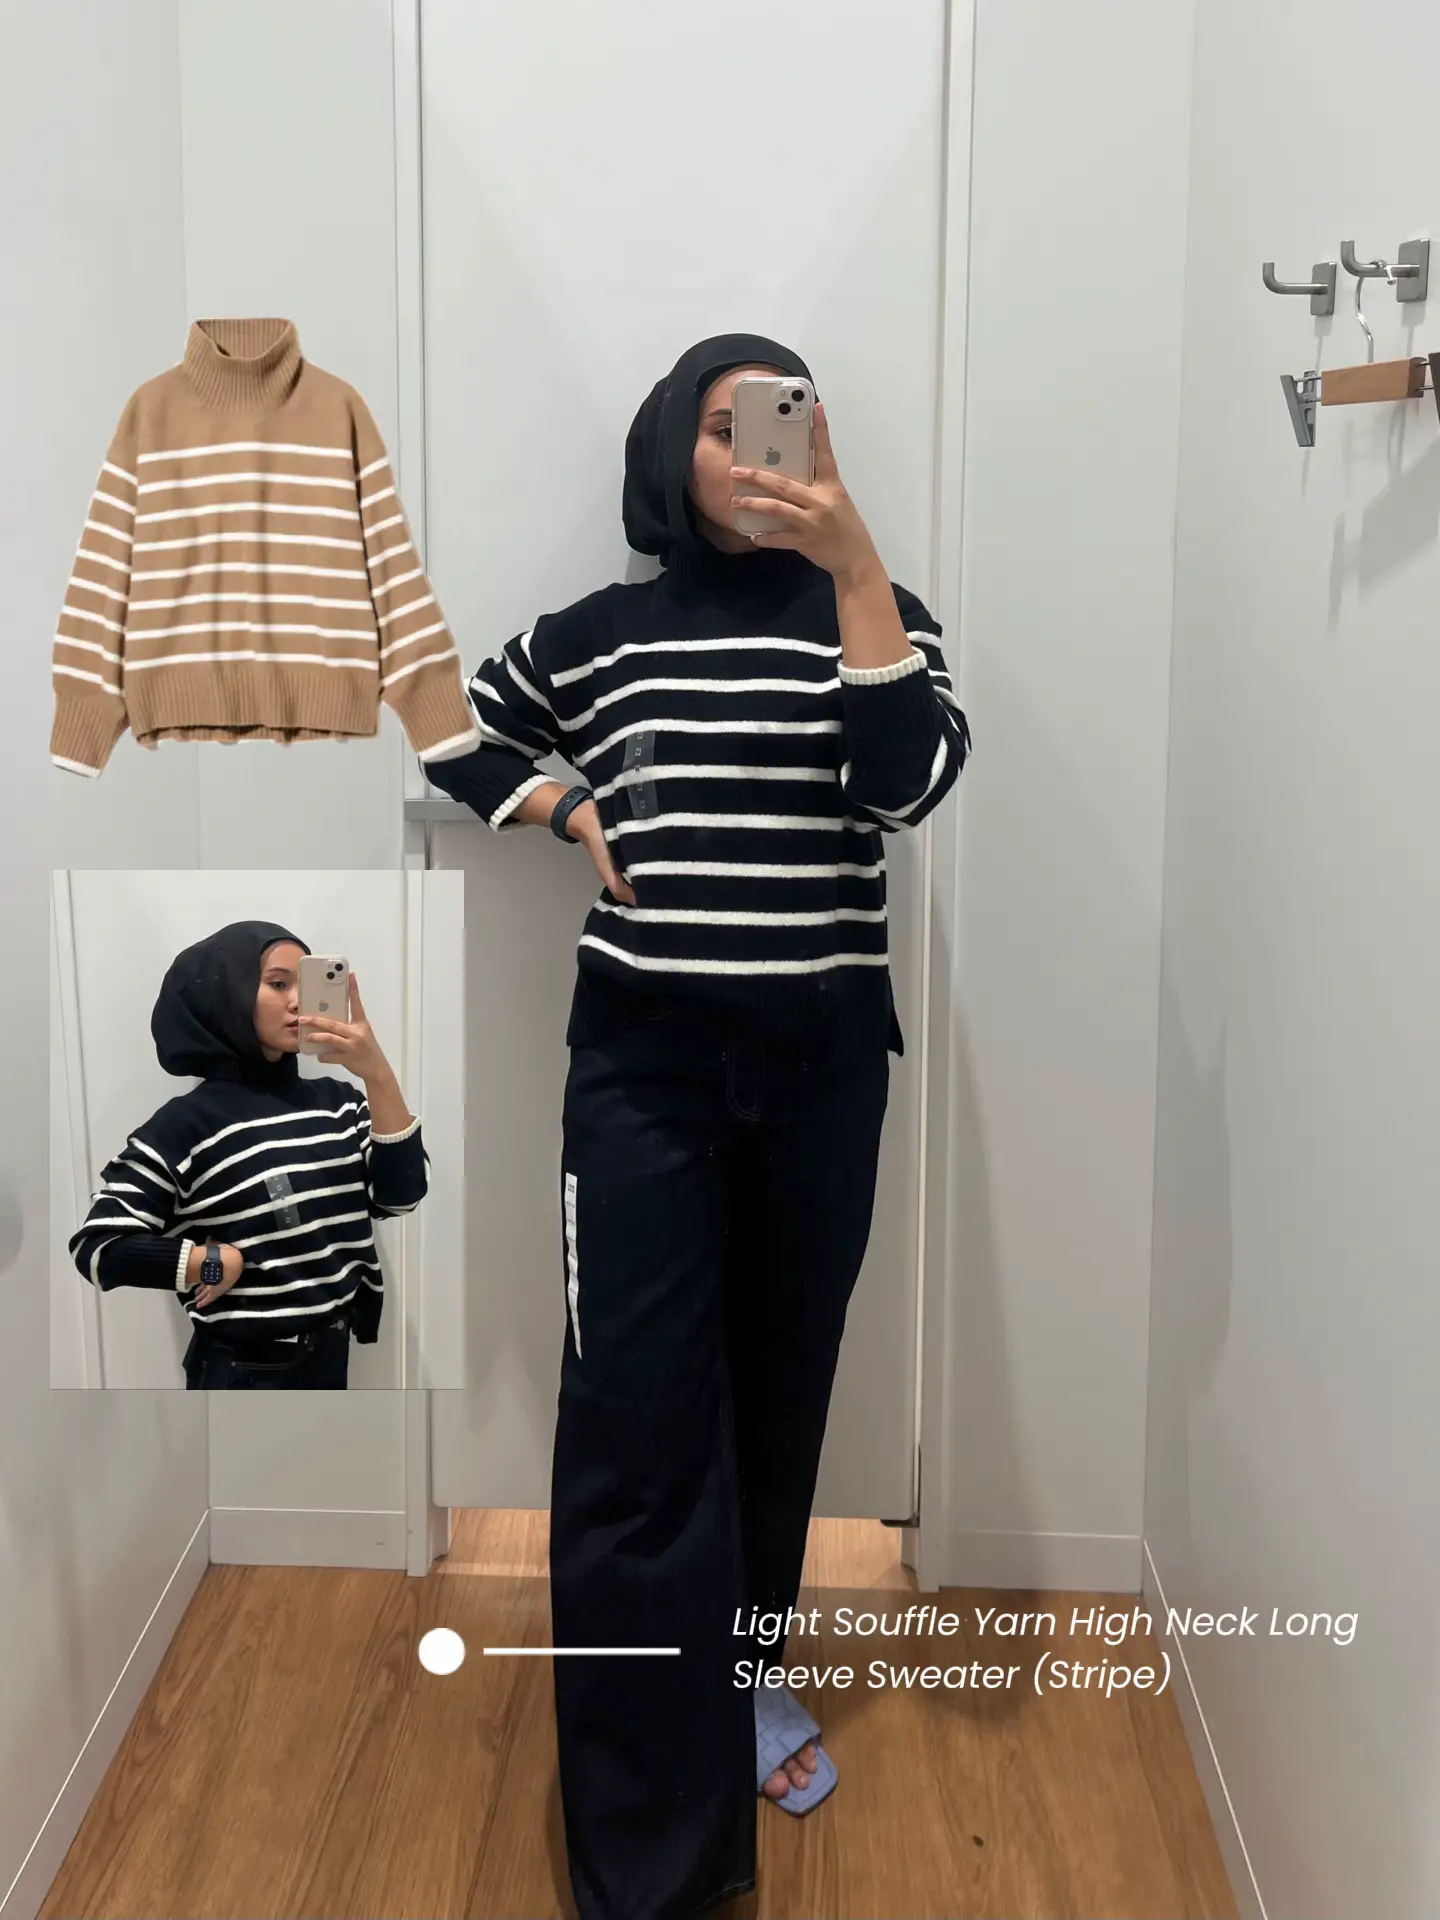 Uniqlo Try-On: Minimal Outfit Ideas! 💡, Galeri disiarkan oleh Hana Aisya